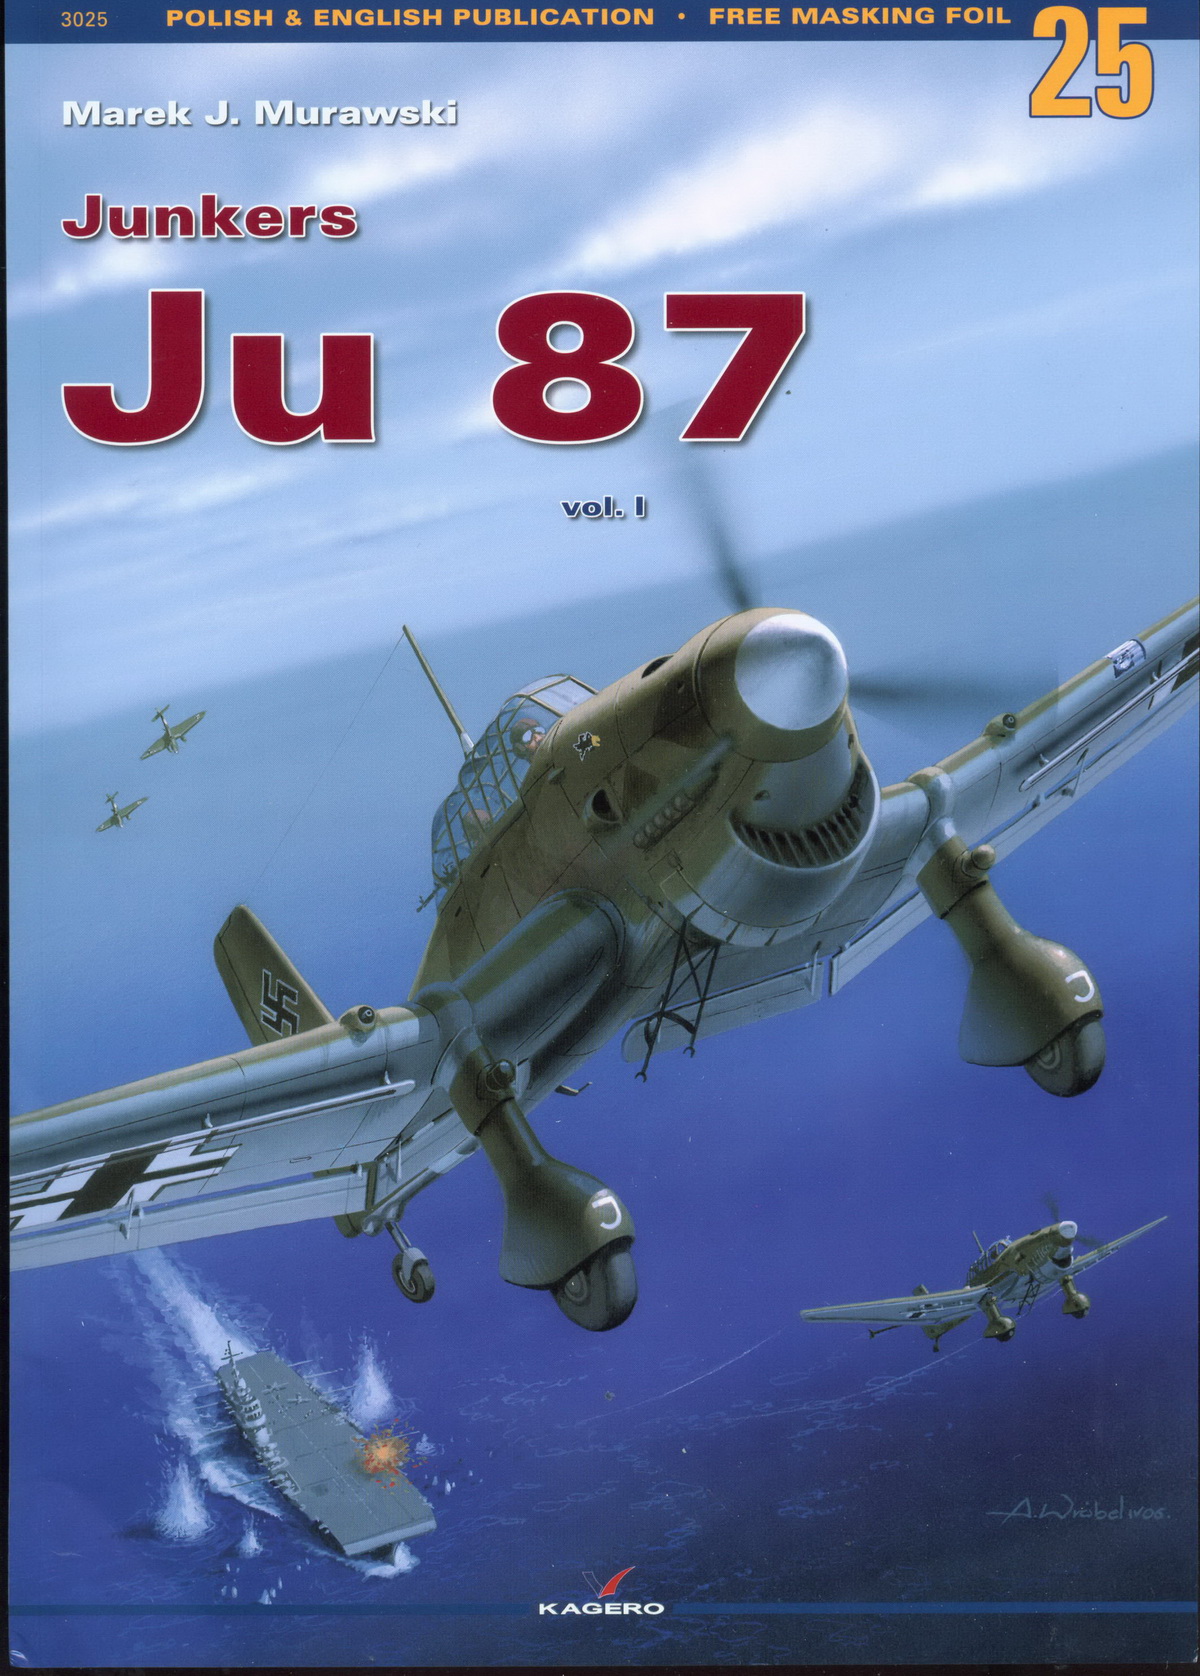 REF Kagero Ju 87 Vol 1 0A